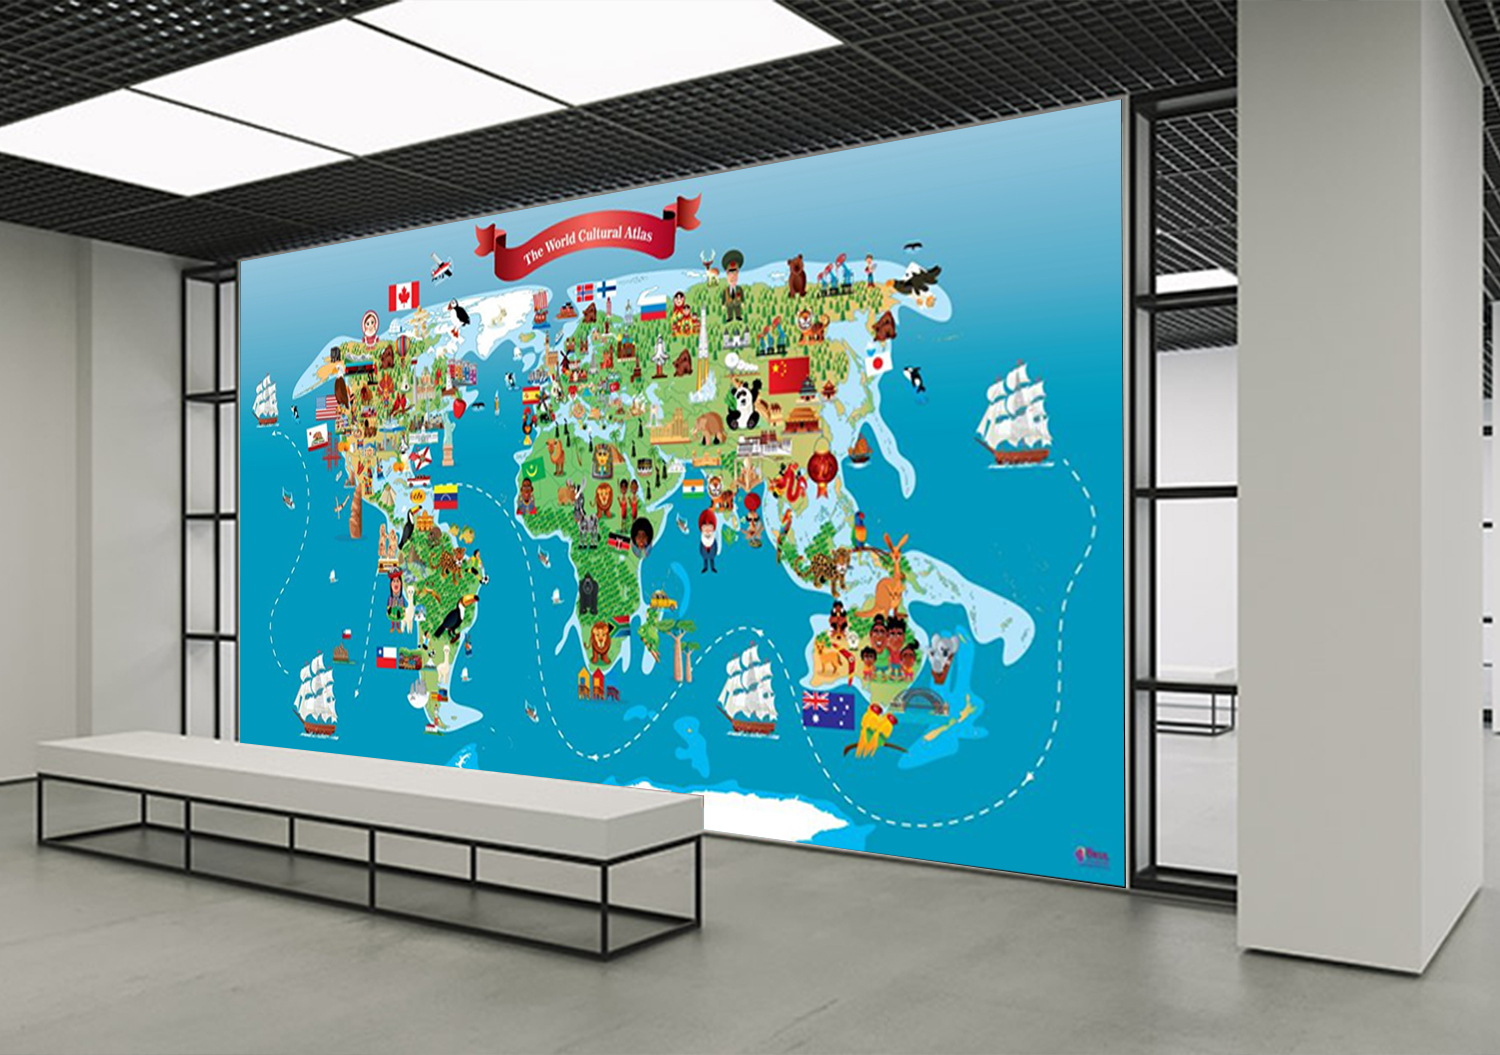 The World Cultural Atlas